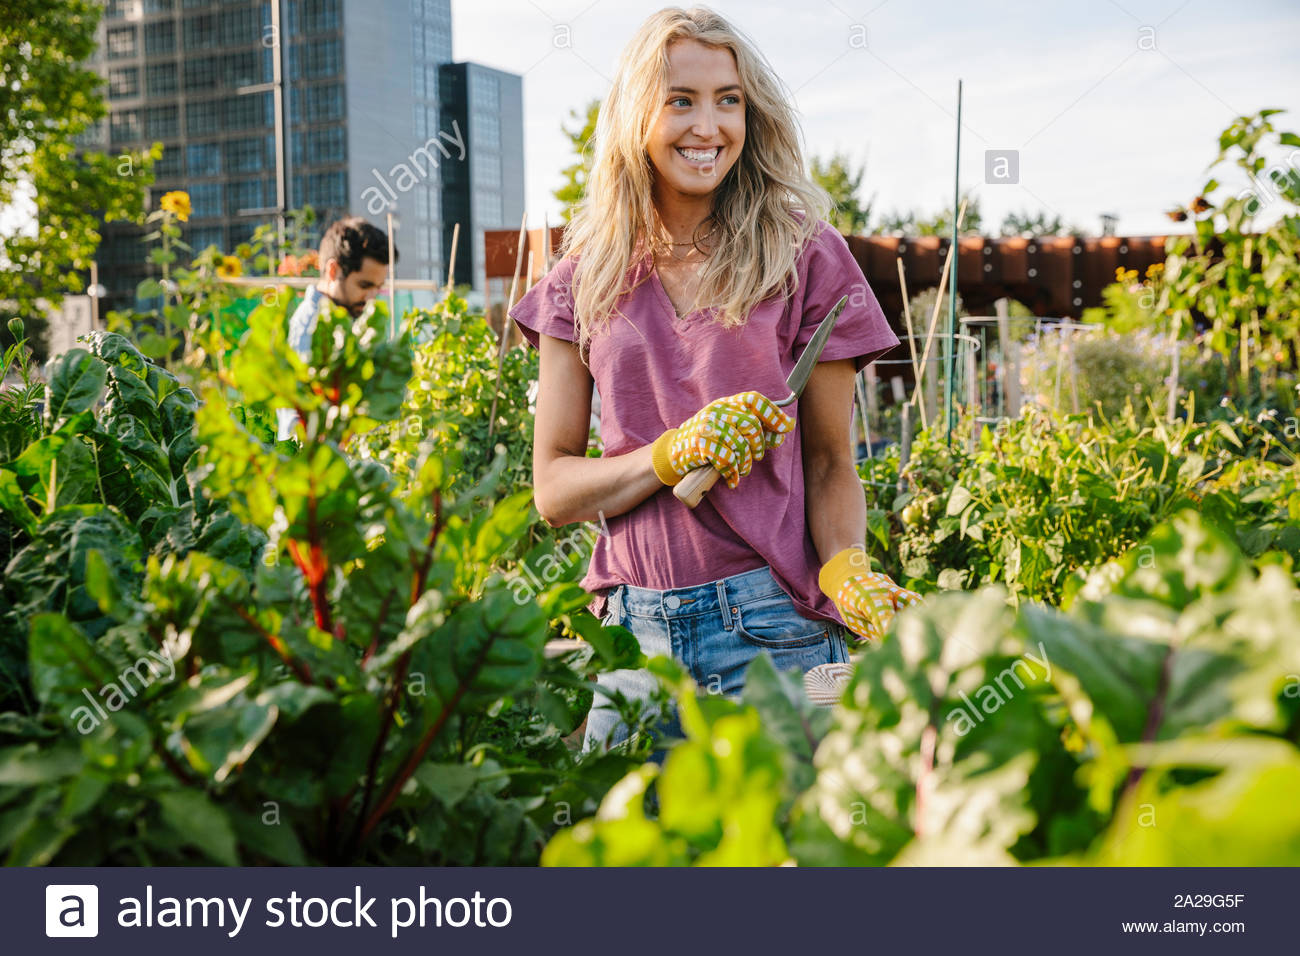 Portrait happy young woman in urban, sunny community garden Stock Photo